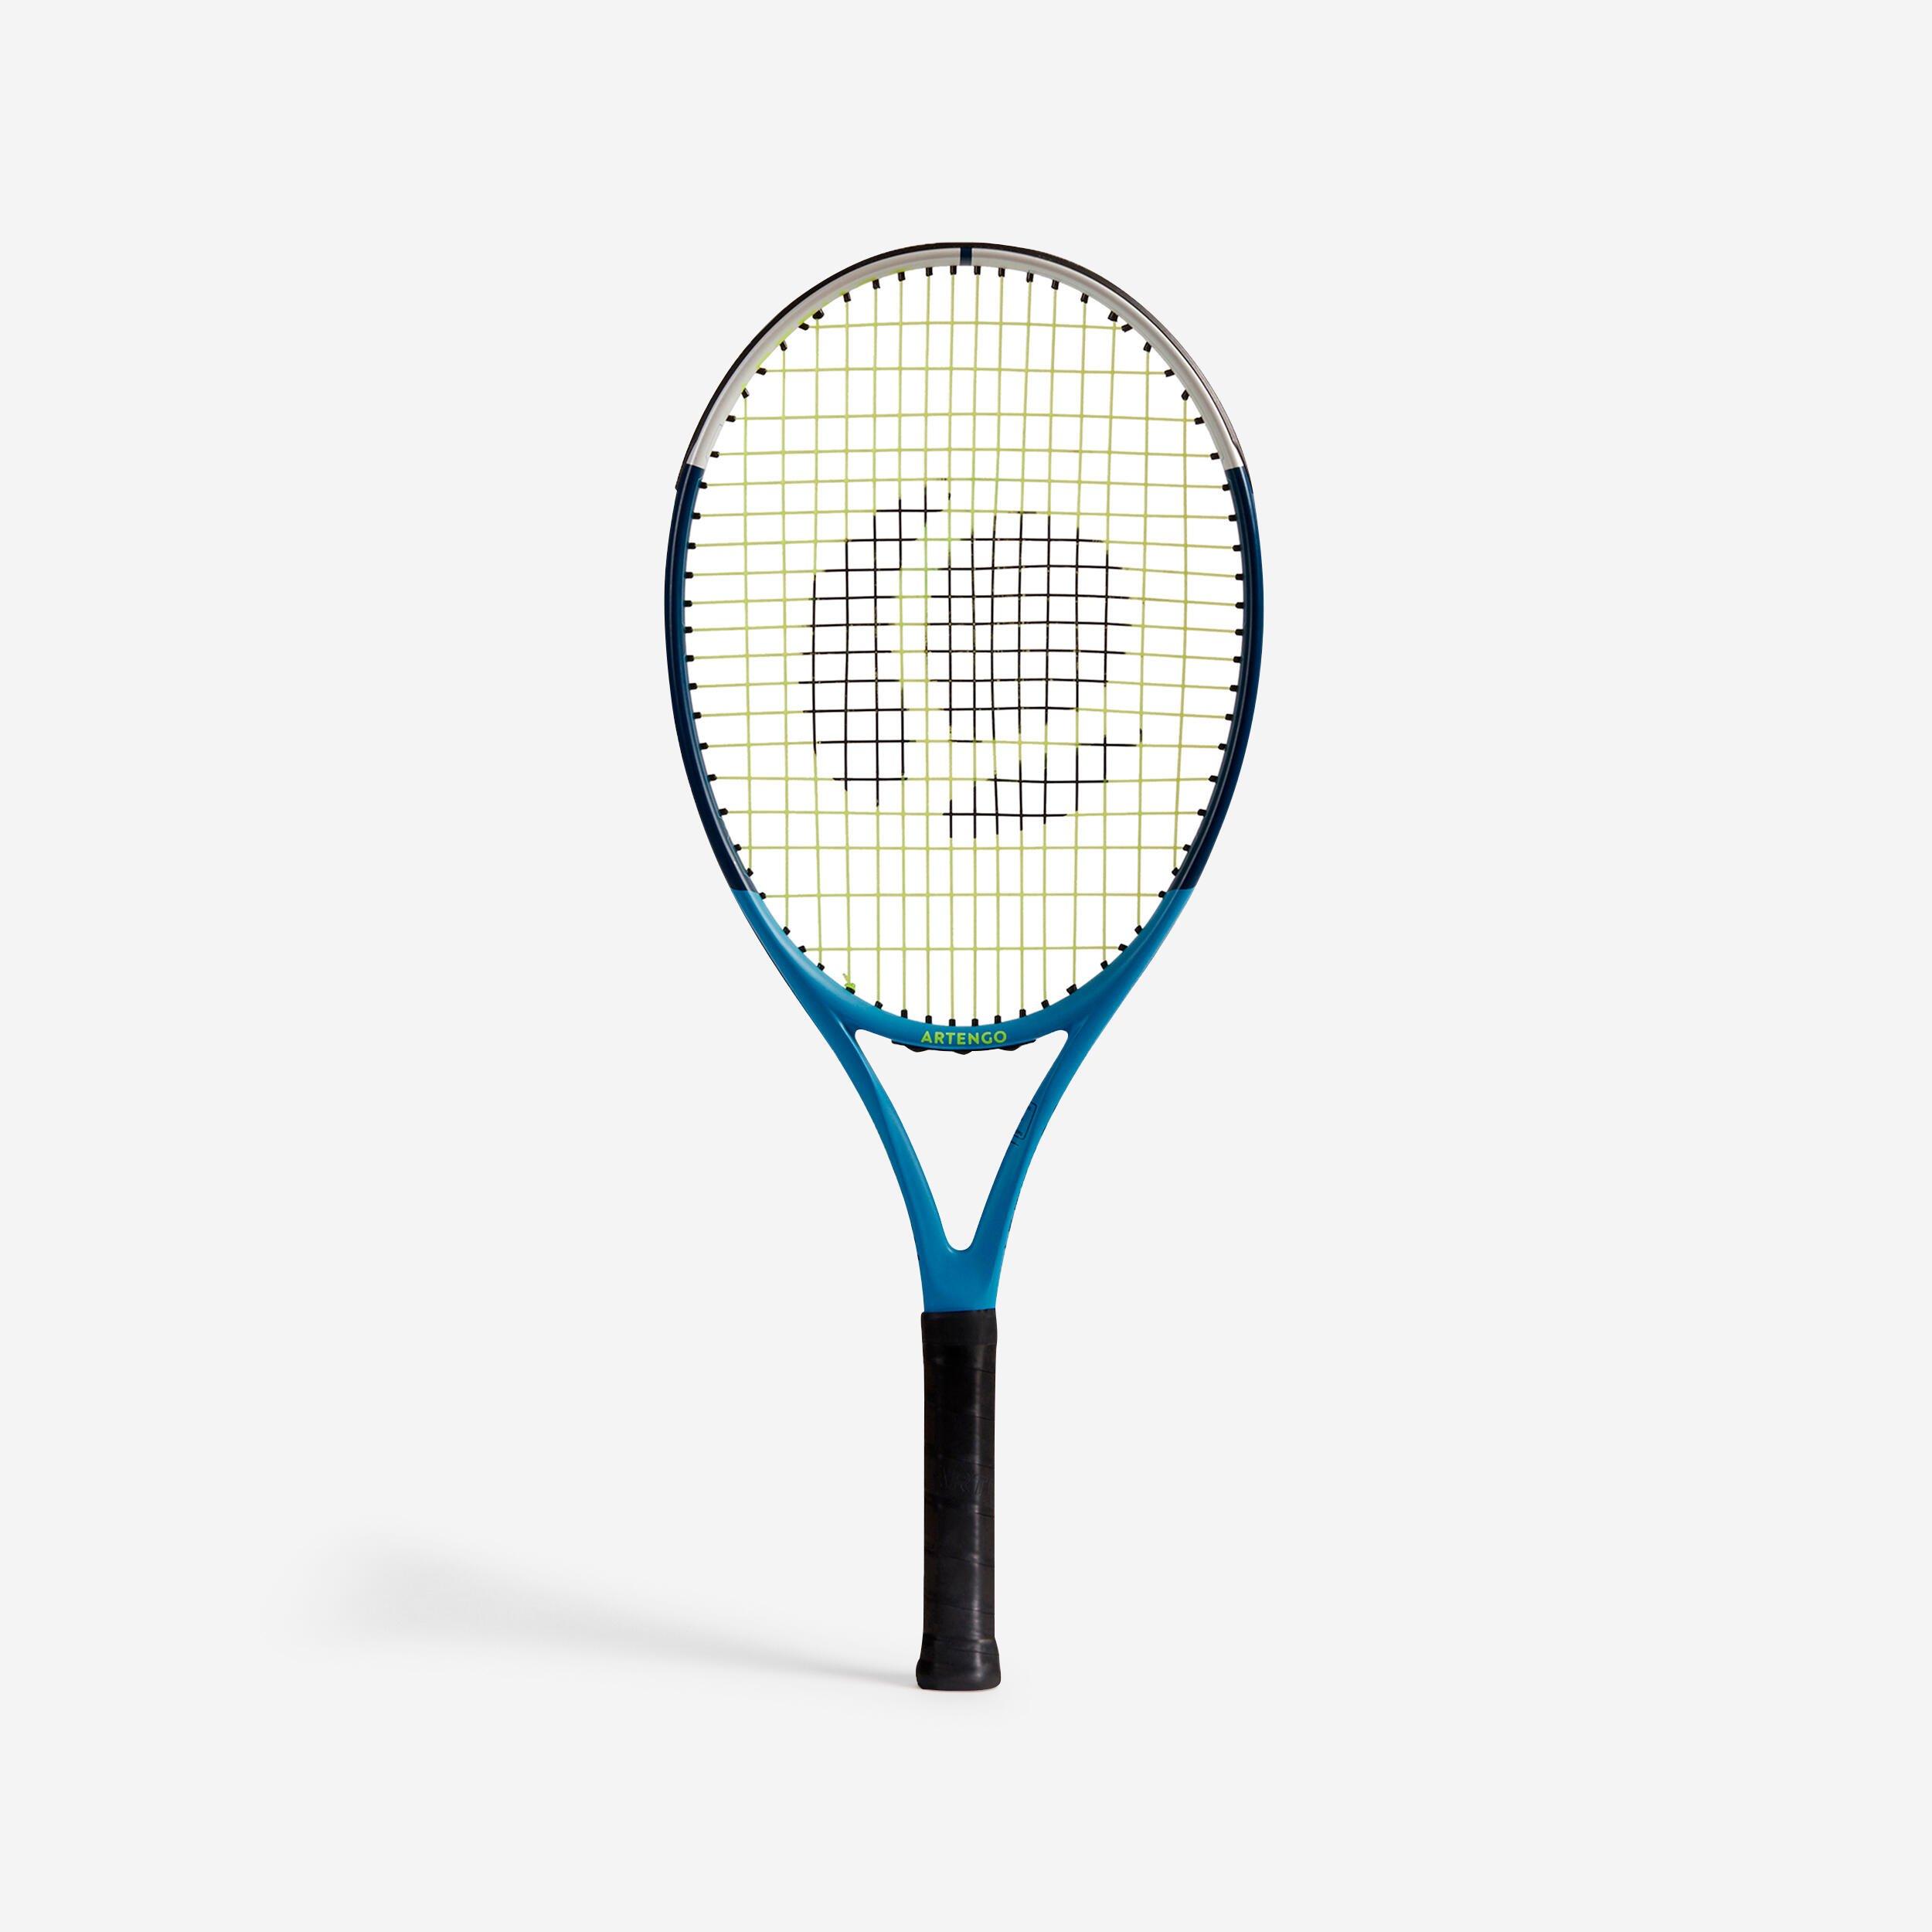 Tr530 25 Tennis Racket